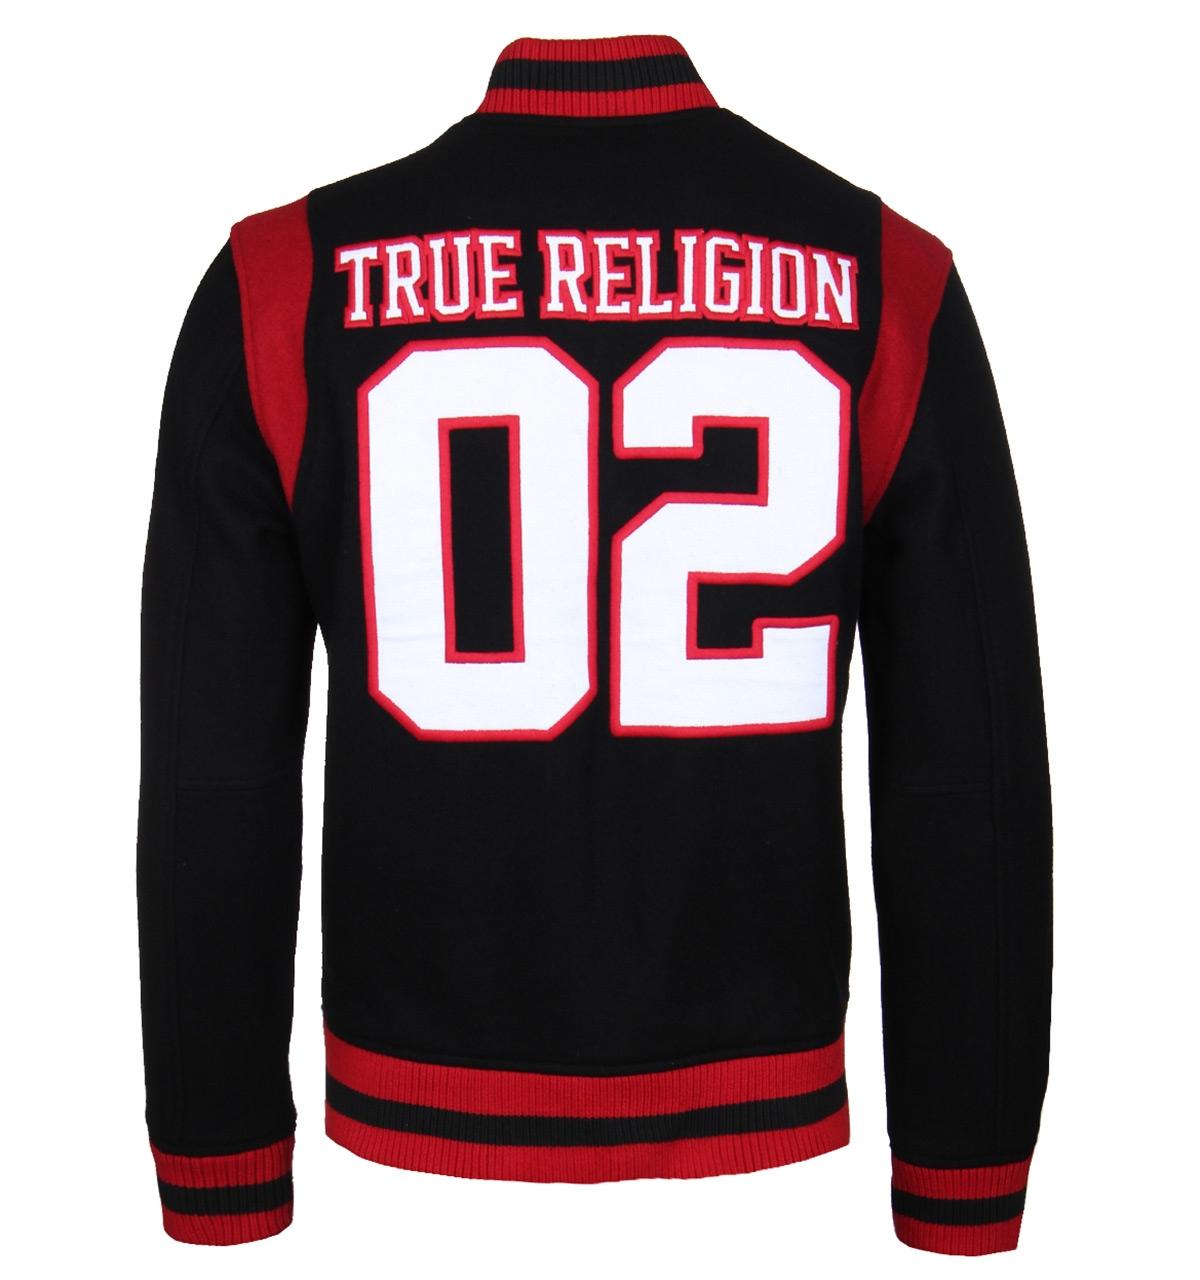 true religion red and black shirt